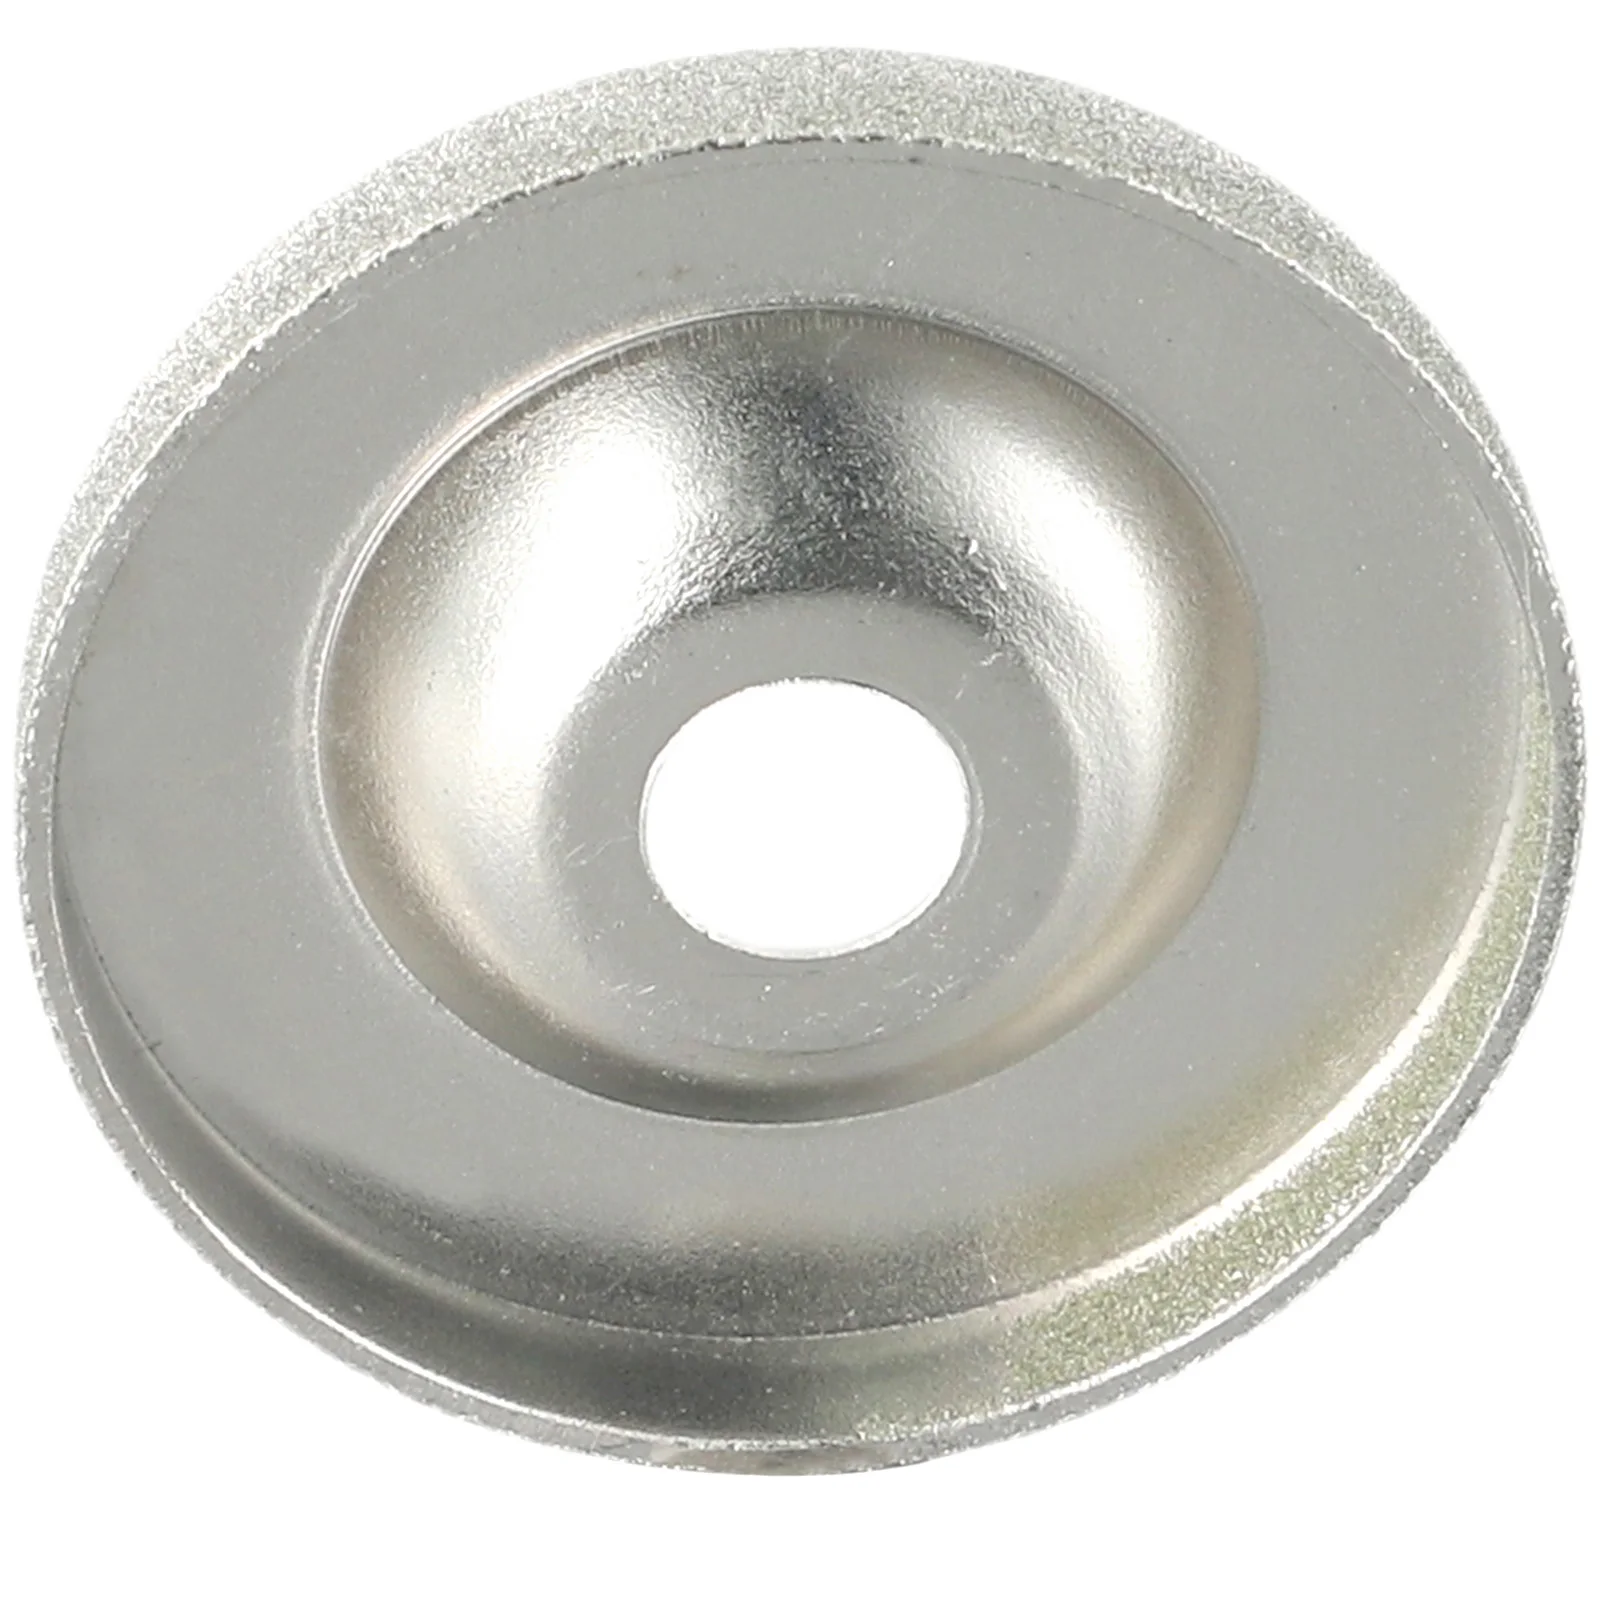 1pc 50mm Diamond Grinding Wheel 180 Grit Grinder Sharpener Angle Cutting Wheel Sharpener 50mm Trimming Rotary Tool